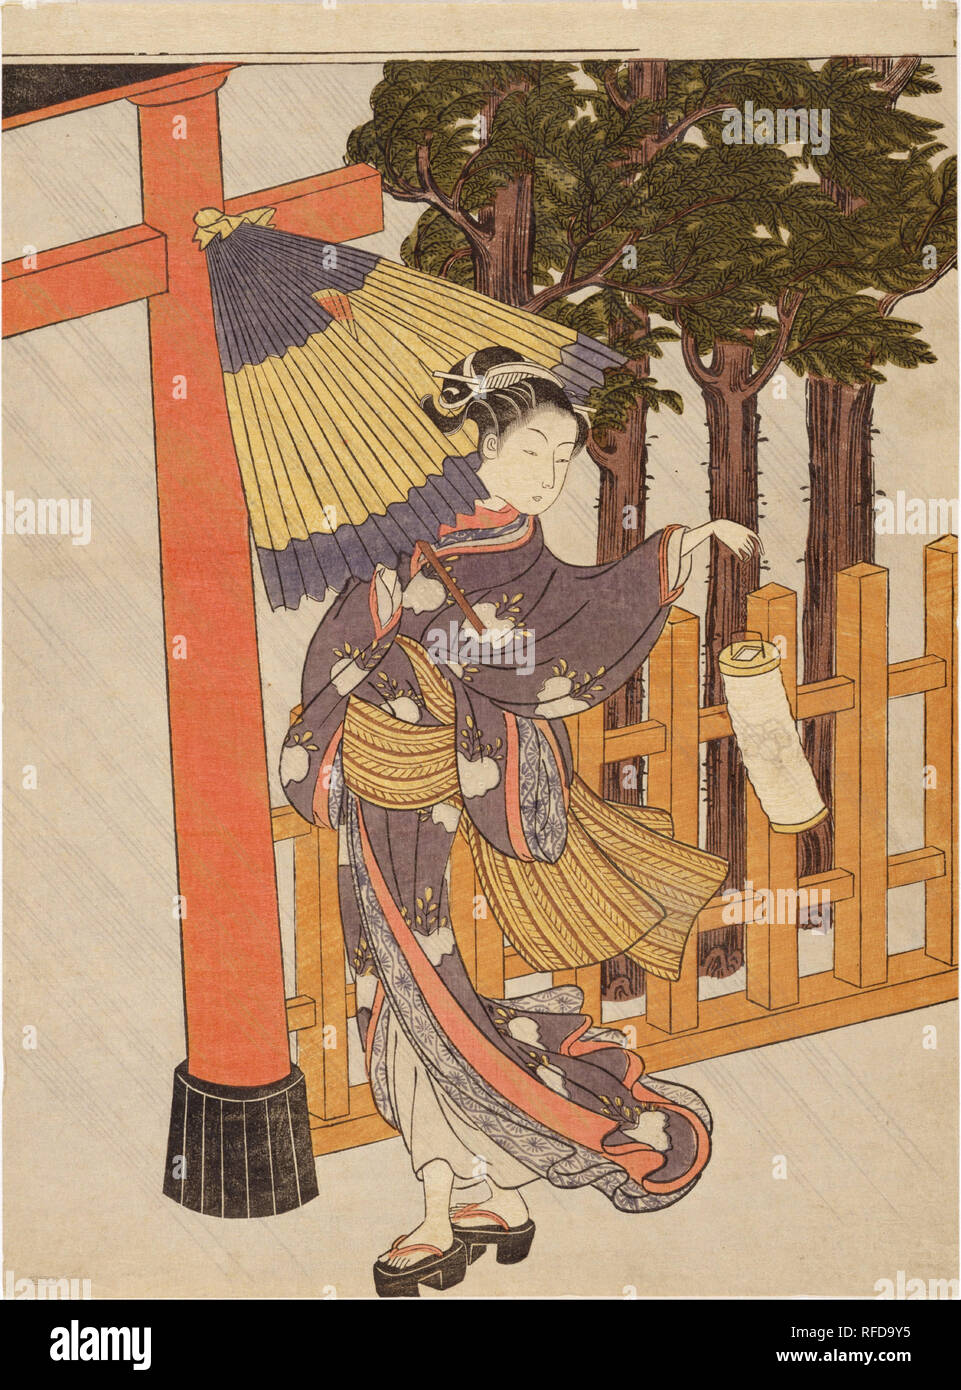 Femme se rendant sur le lieu de culte dans la nuit. Date/Période : période Edo, 18e siècle. La peinture. Auteur : Suzuki Harunobu. HARUNOBU, SUZUKI. Banque D'Images